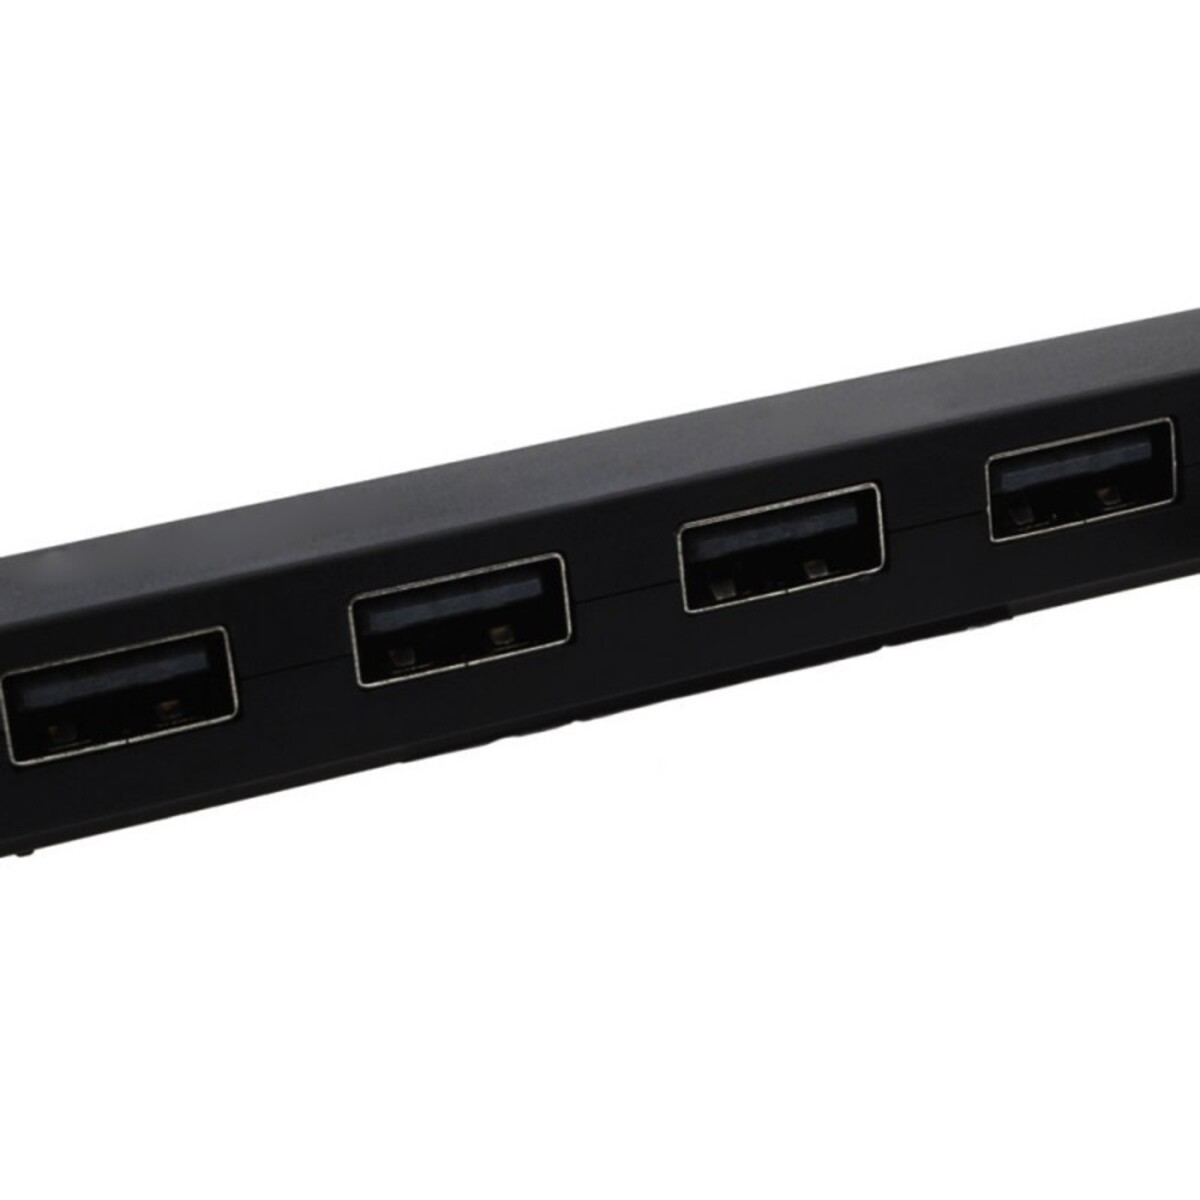 Trands High Speed 4 Port USB 2.0 Metal Design Hub Black 95 Millimetre HB12